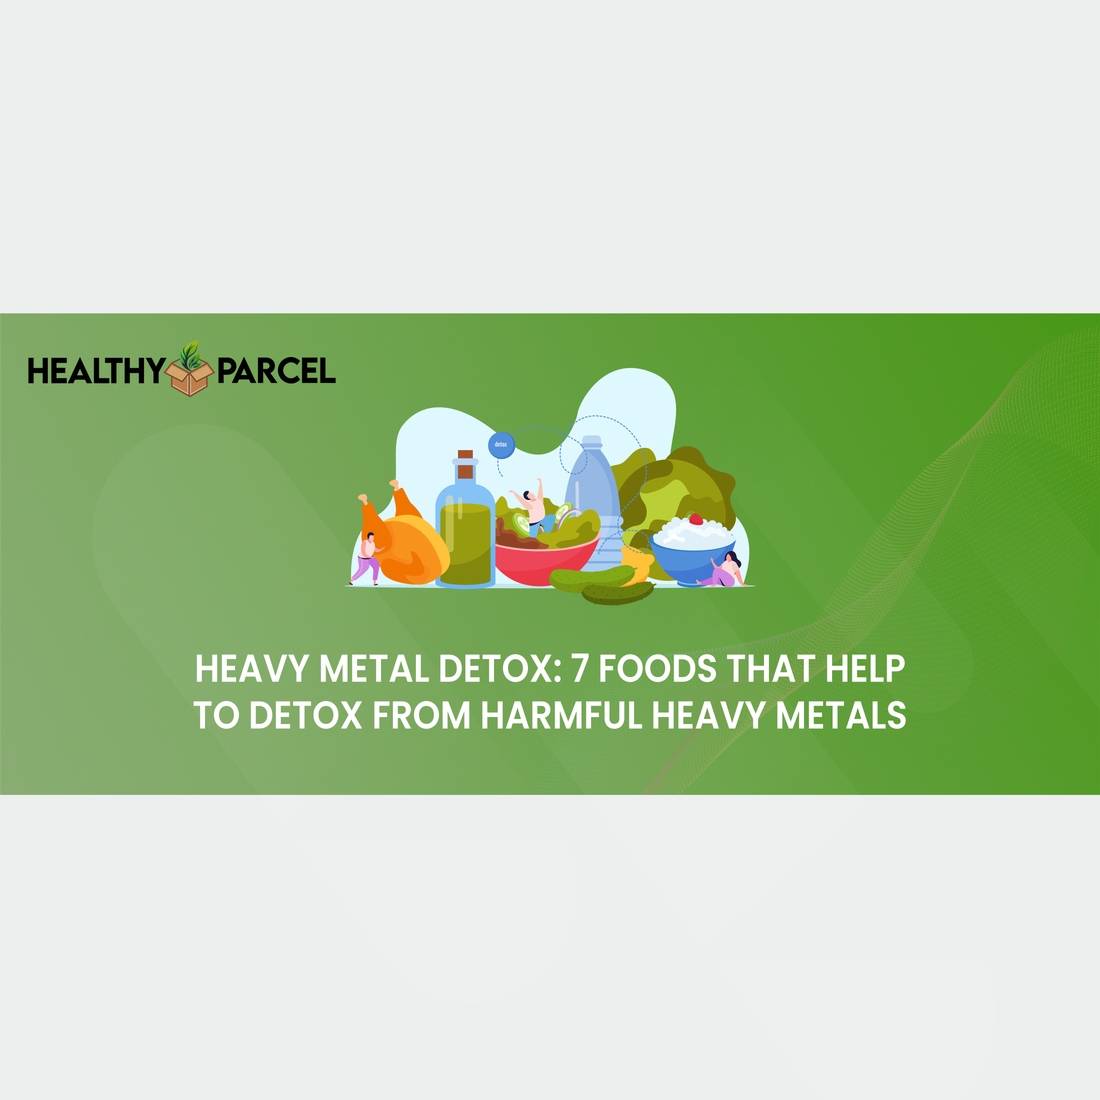 Heavy Metal Detox: 7 Foods That Help To Detox from Harmful Heavy Metals